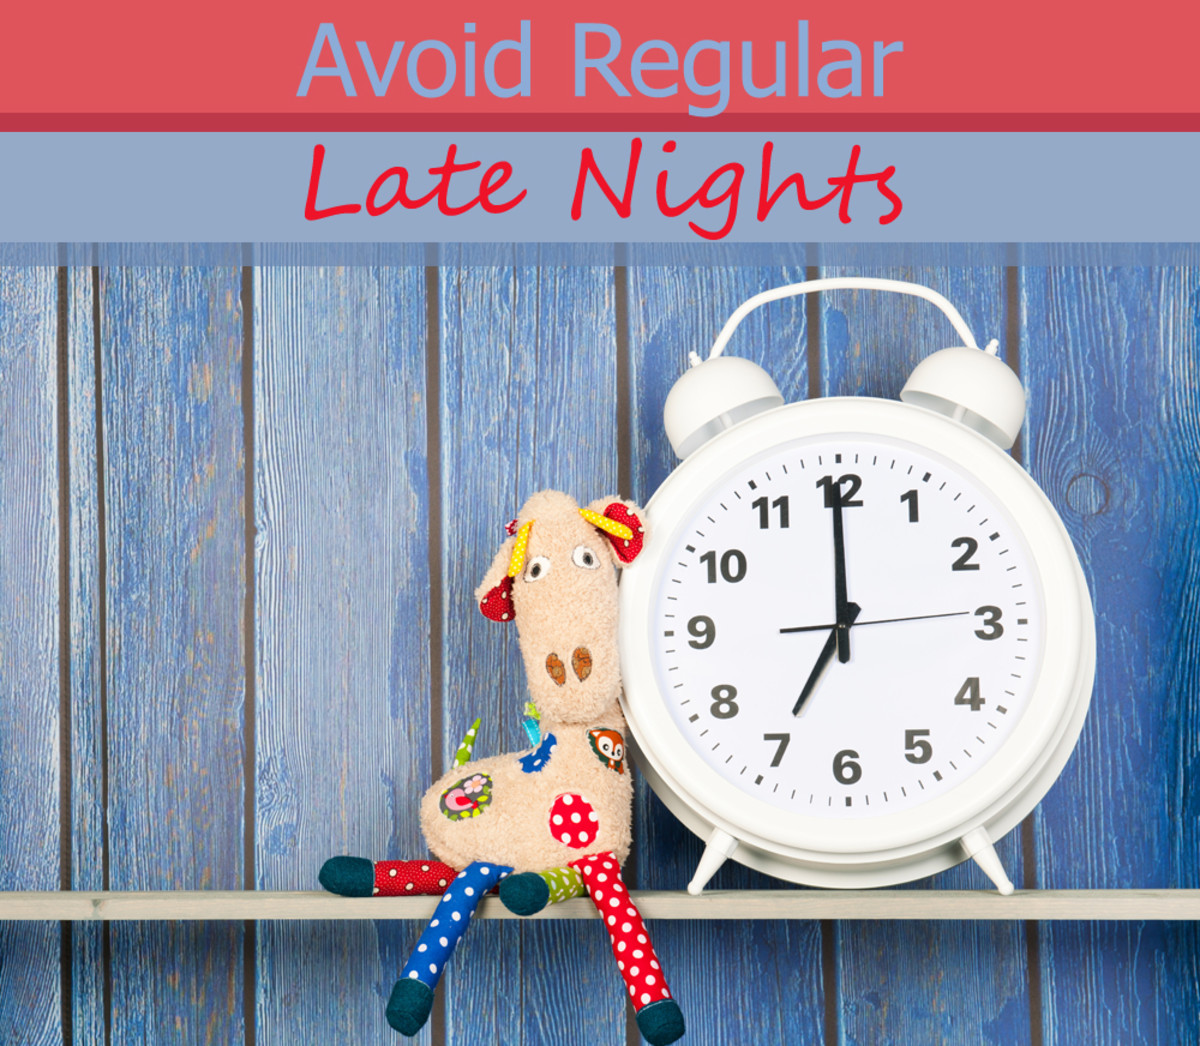 Children Should Avoid Regular Late Nights